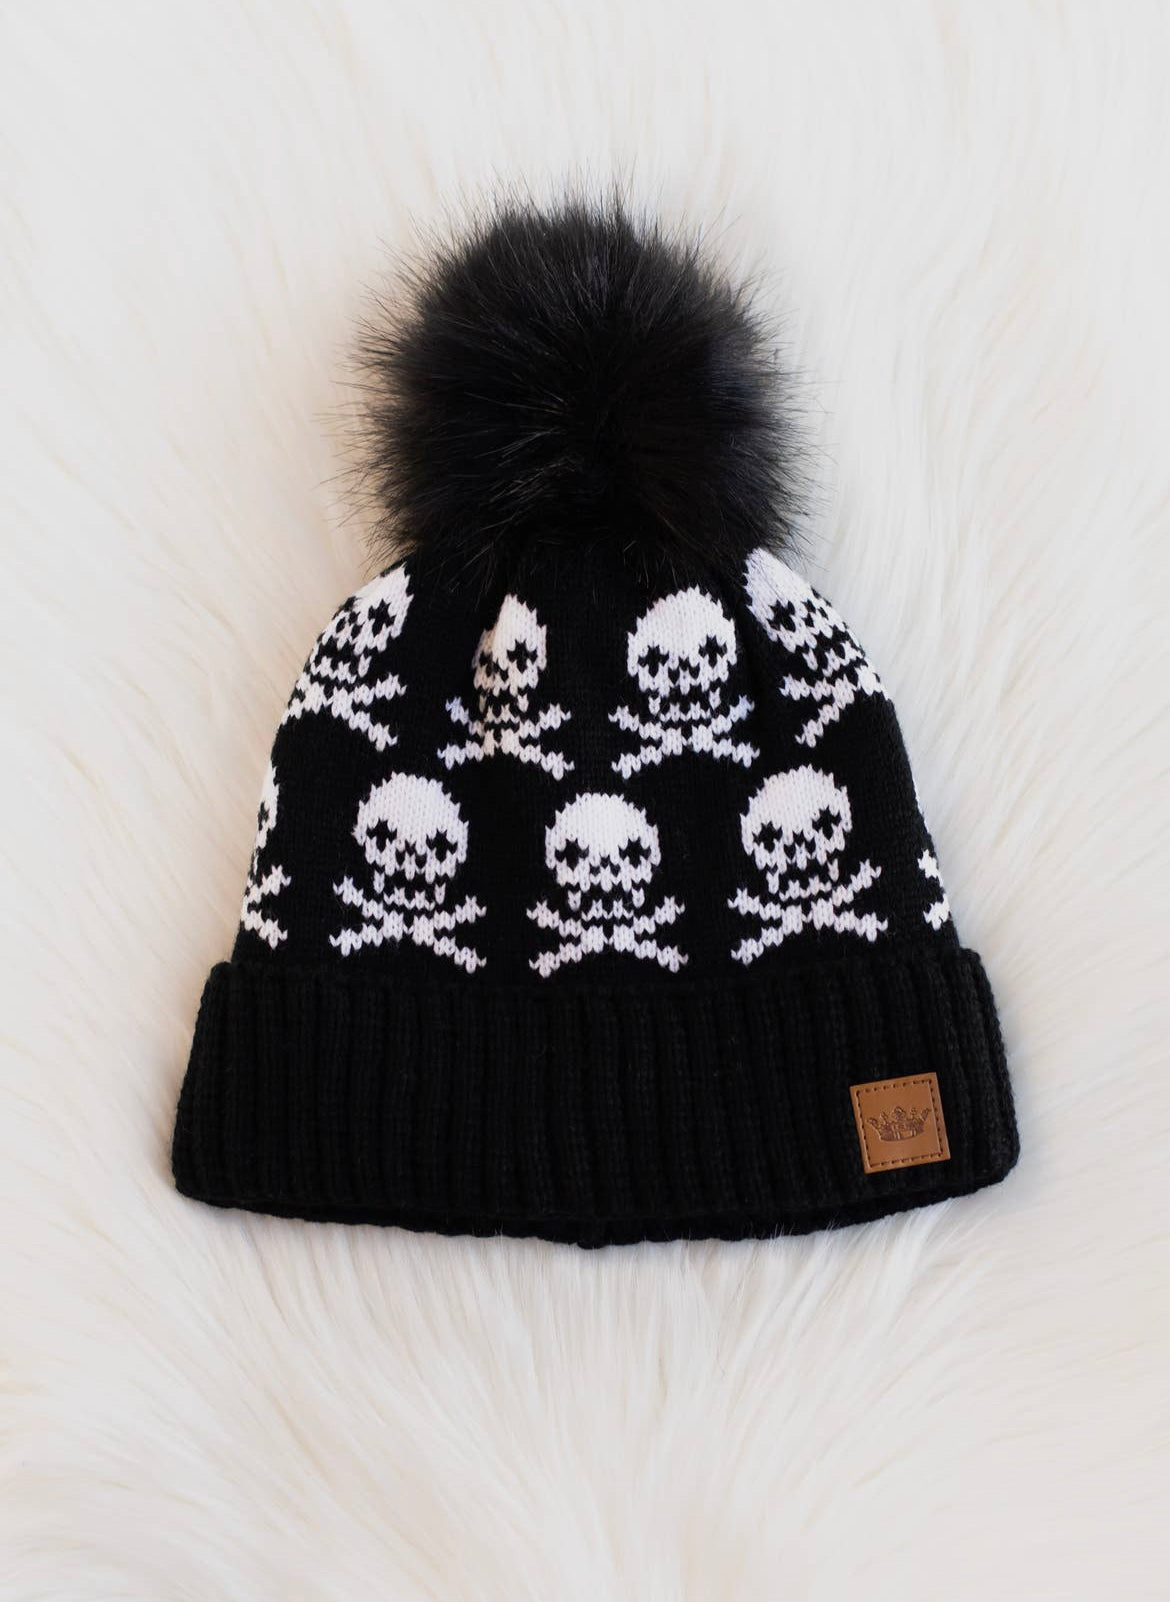 Black skull pom hat